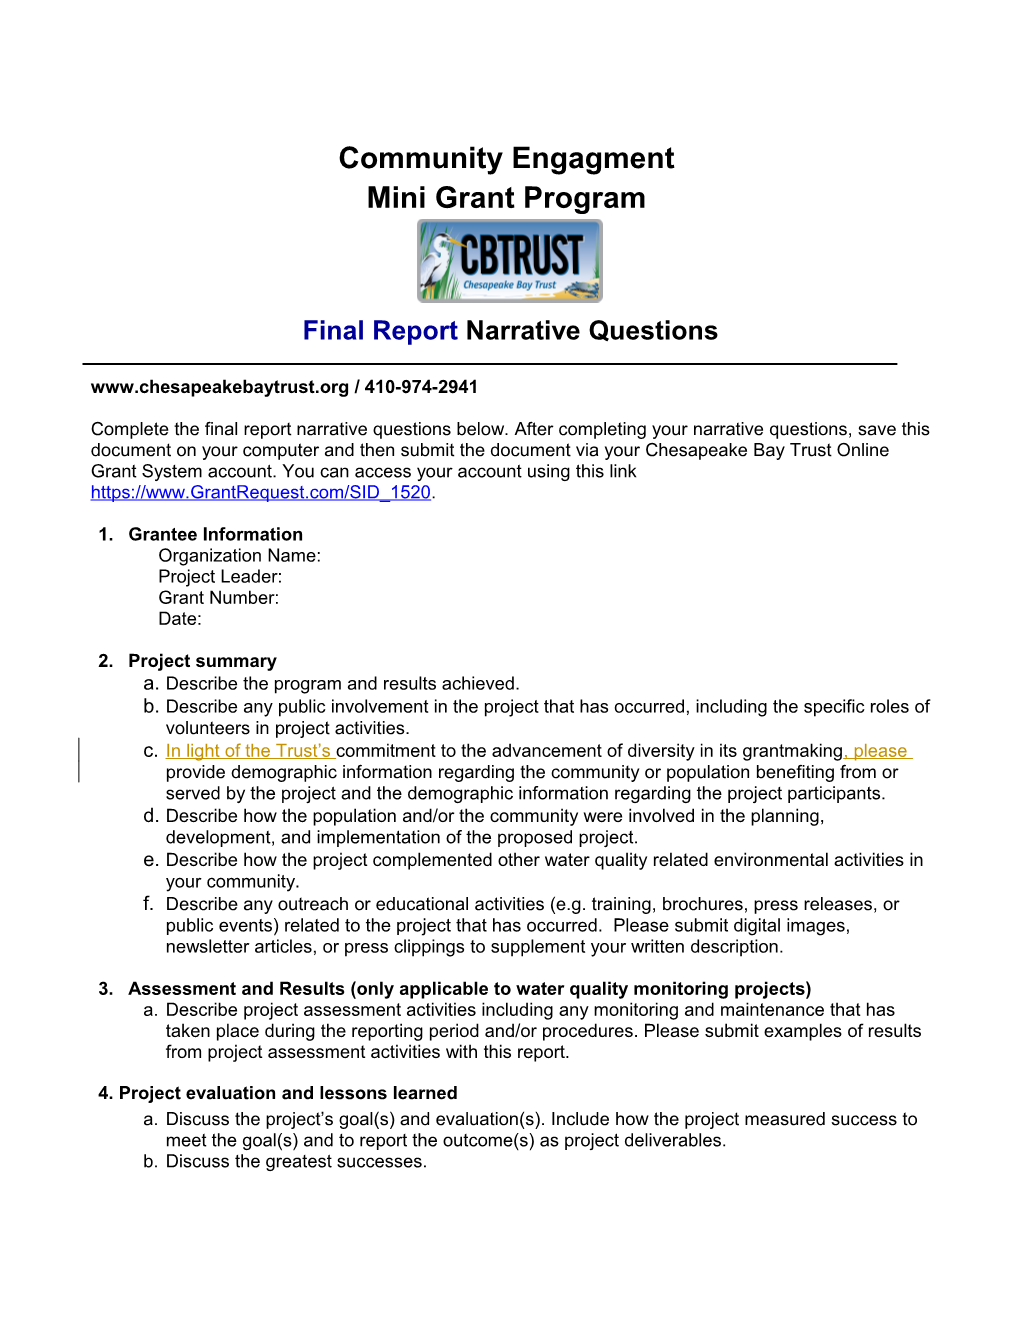 Mini Grant Program Final Report Form Page 1